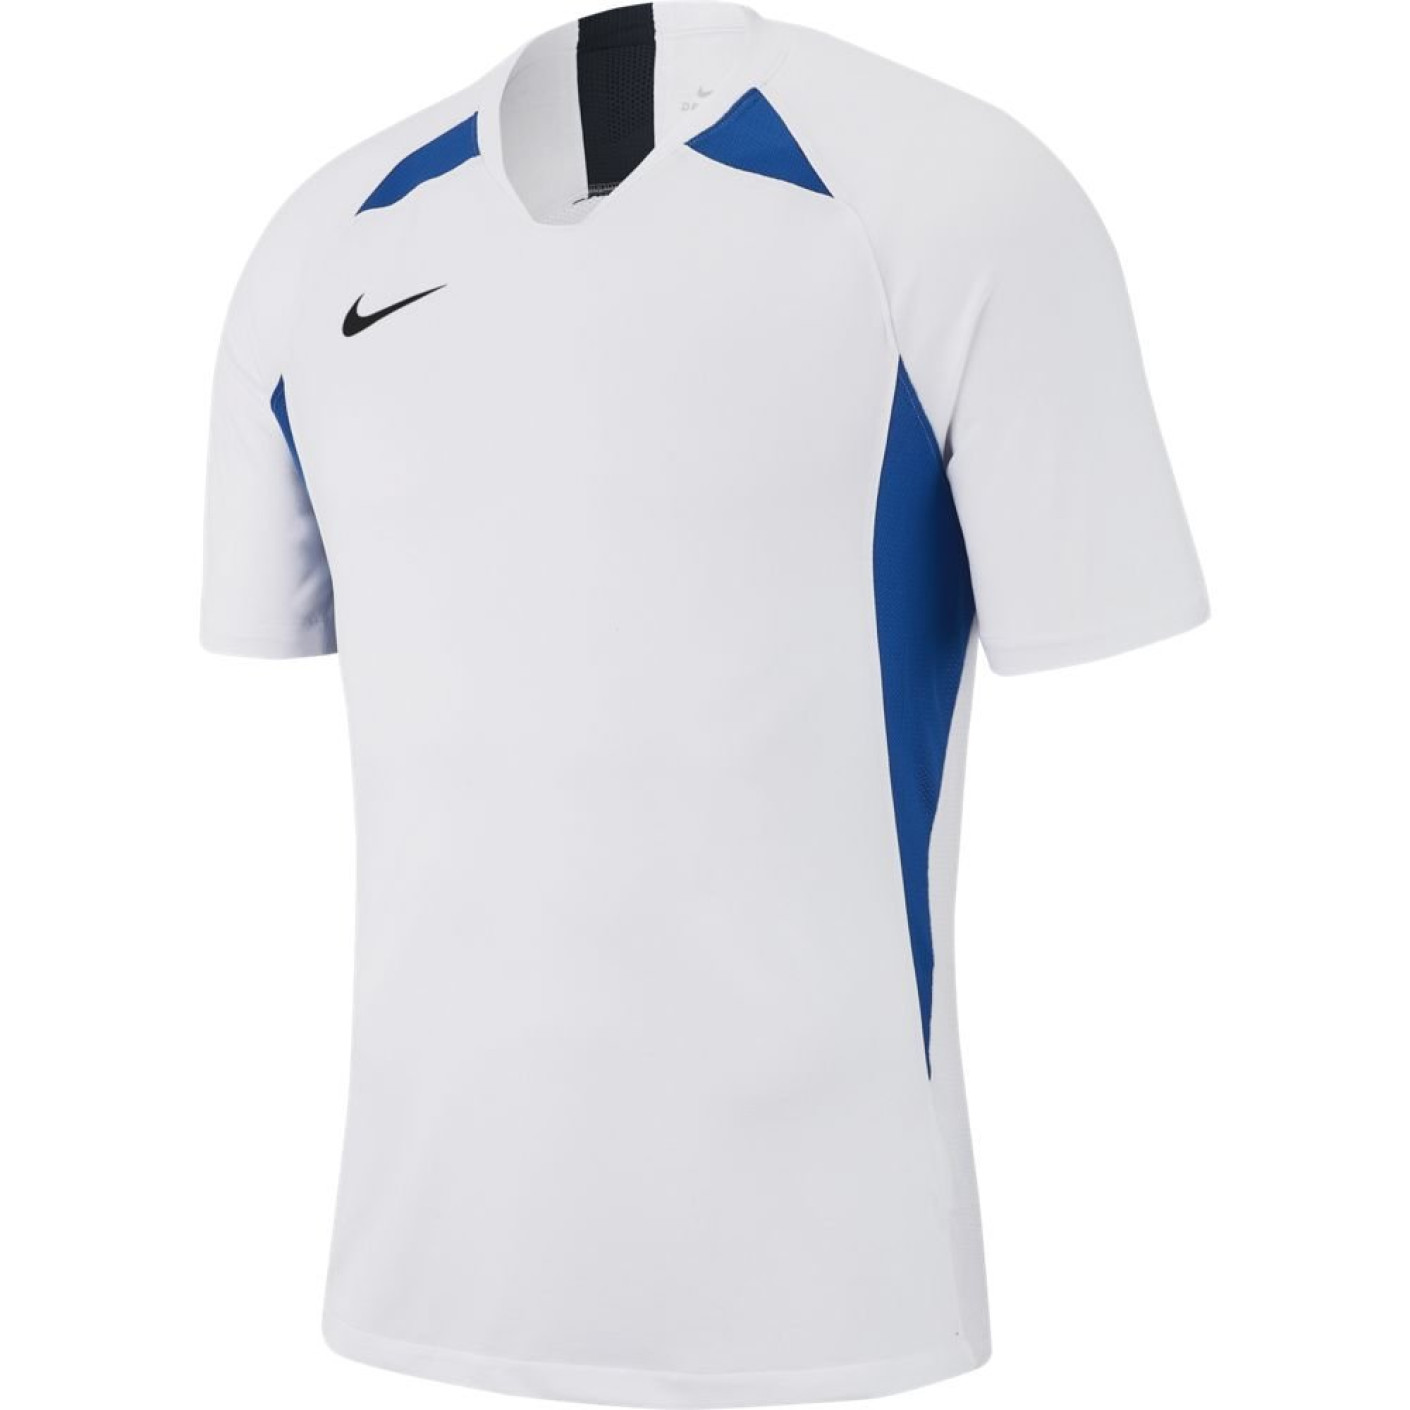 Nike Dry Legend Voetbalshirt Wit Blauw